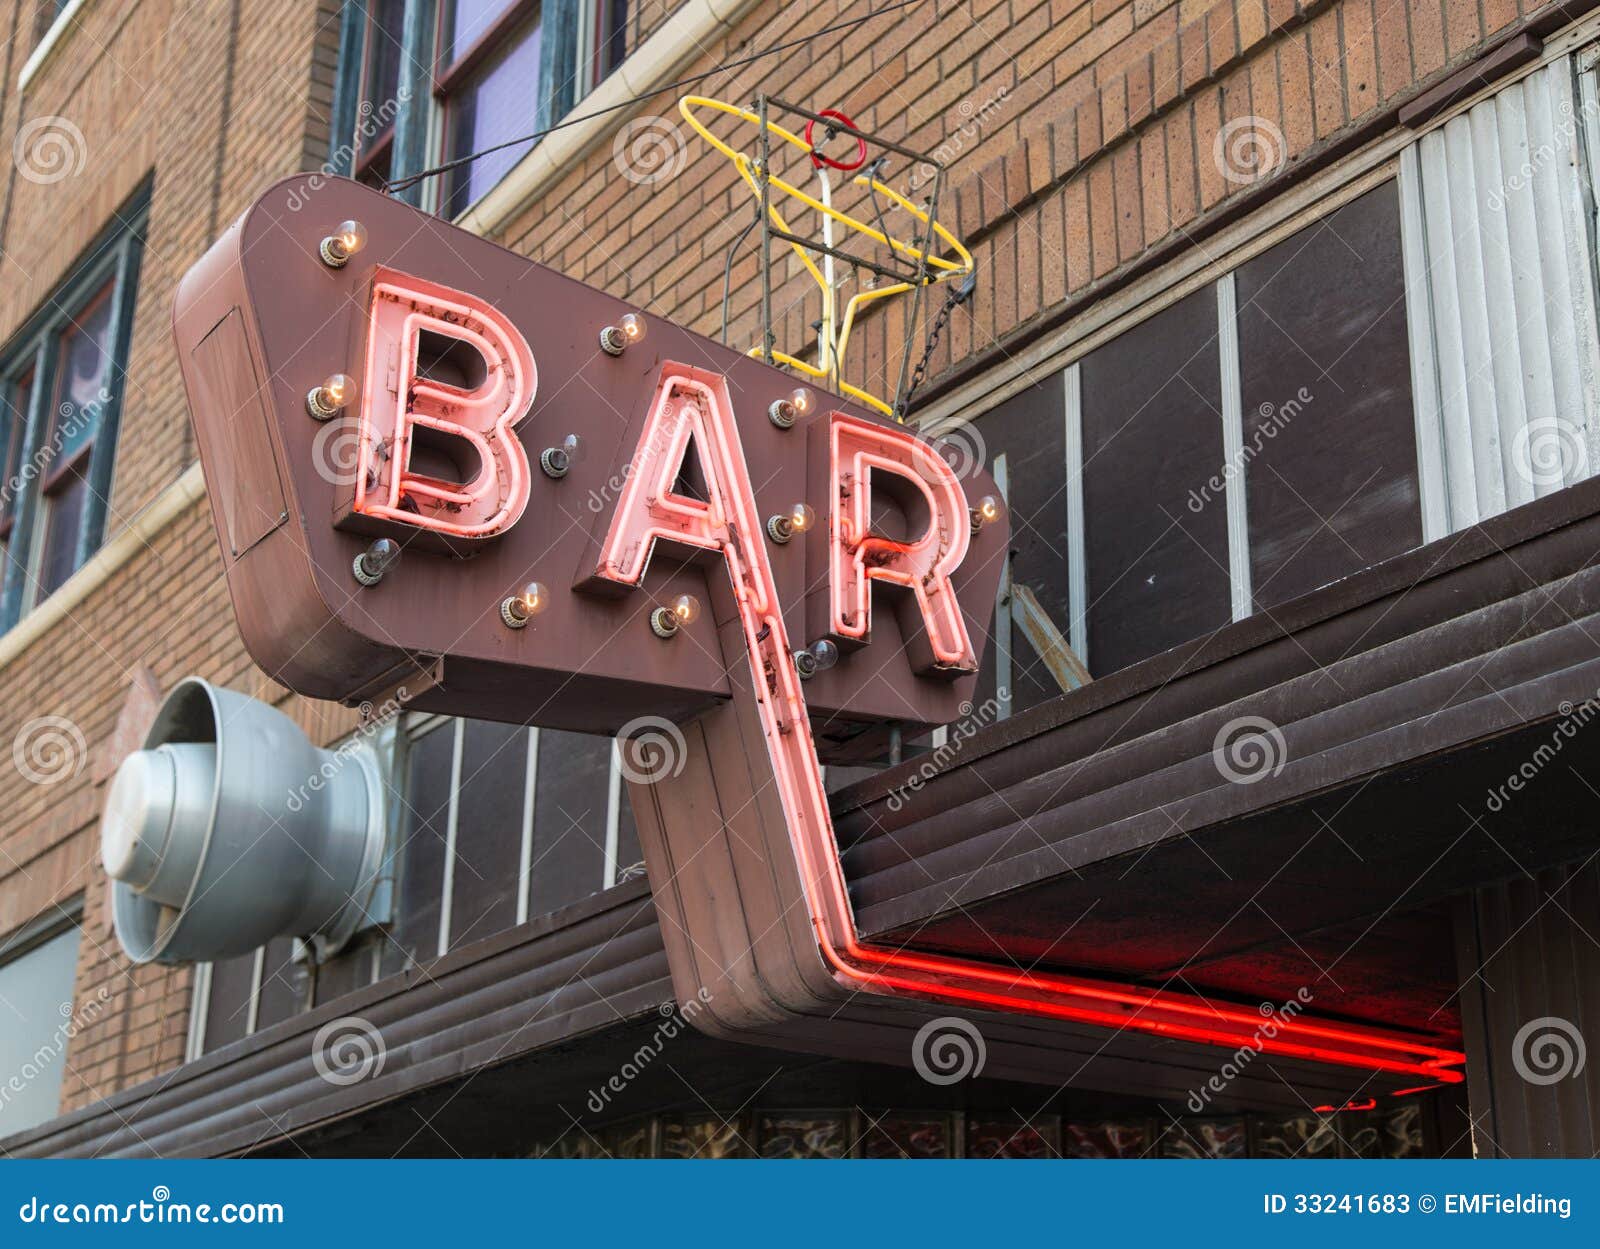 Vintage Neon Bar Sign Stock Photos - Image: 33241683